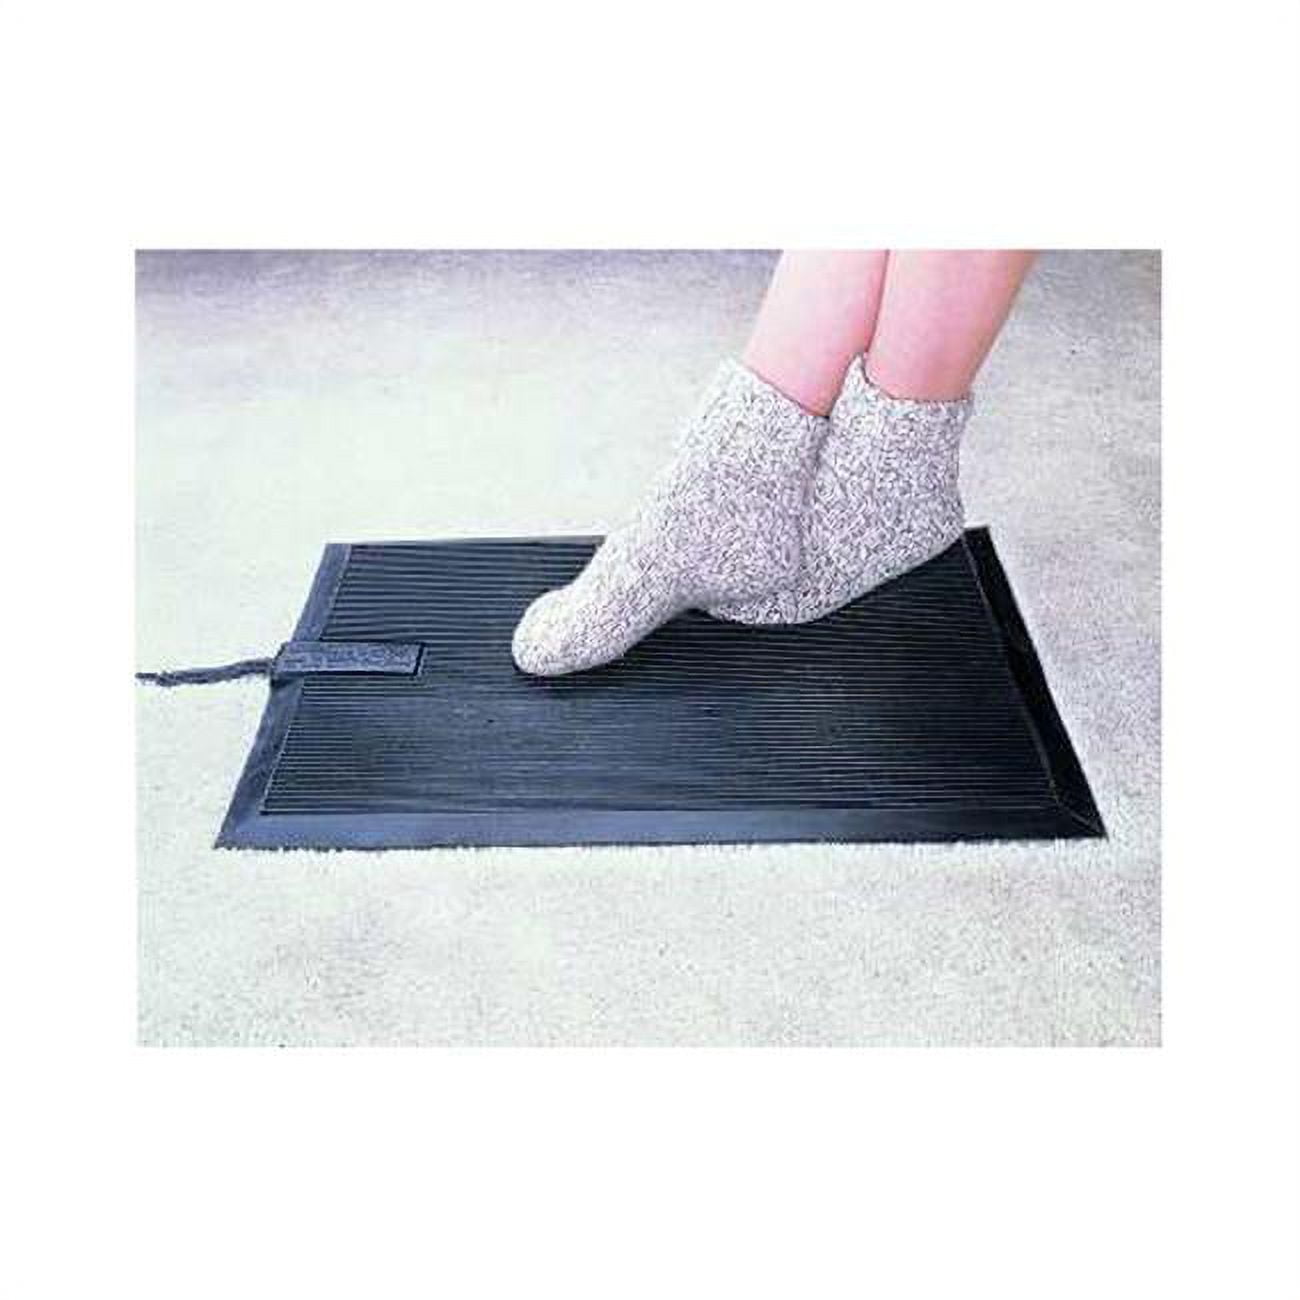 Best Deal for Electric Heating Floor Mat, Heated Blanket, Foot